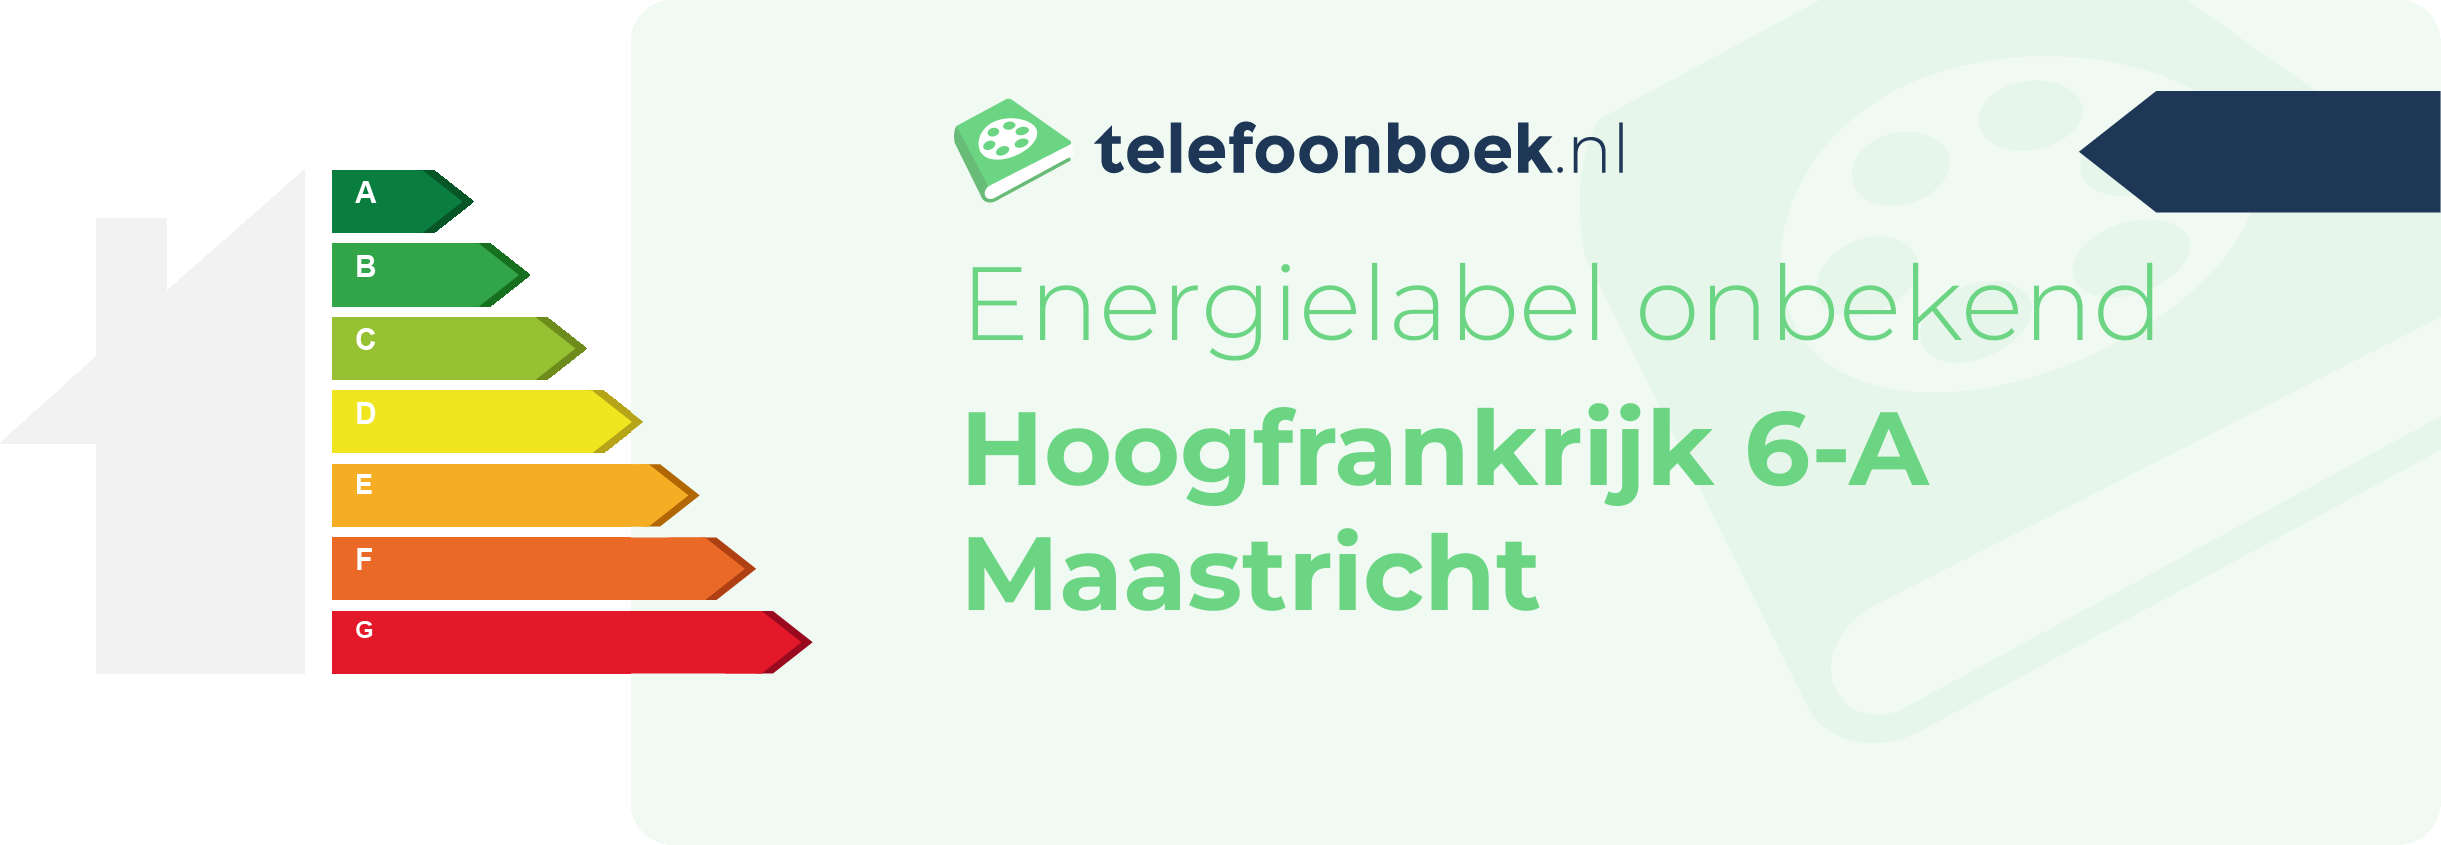 Energielabel Hoogfrankrijk 6-A Maastricht